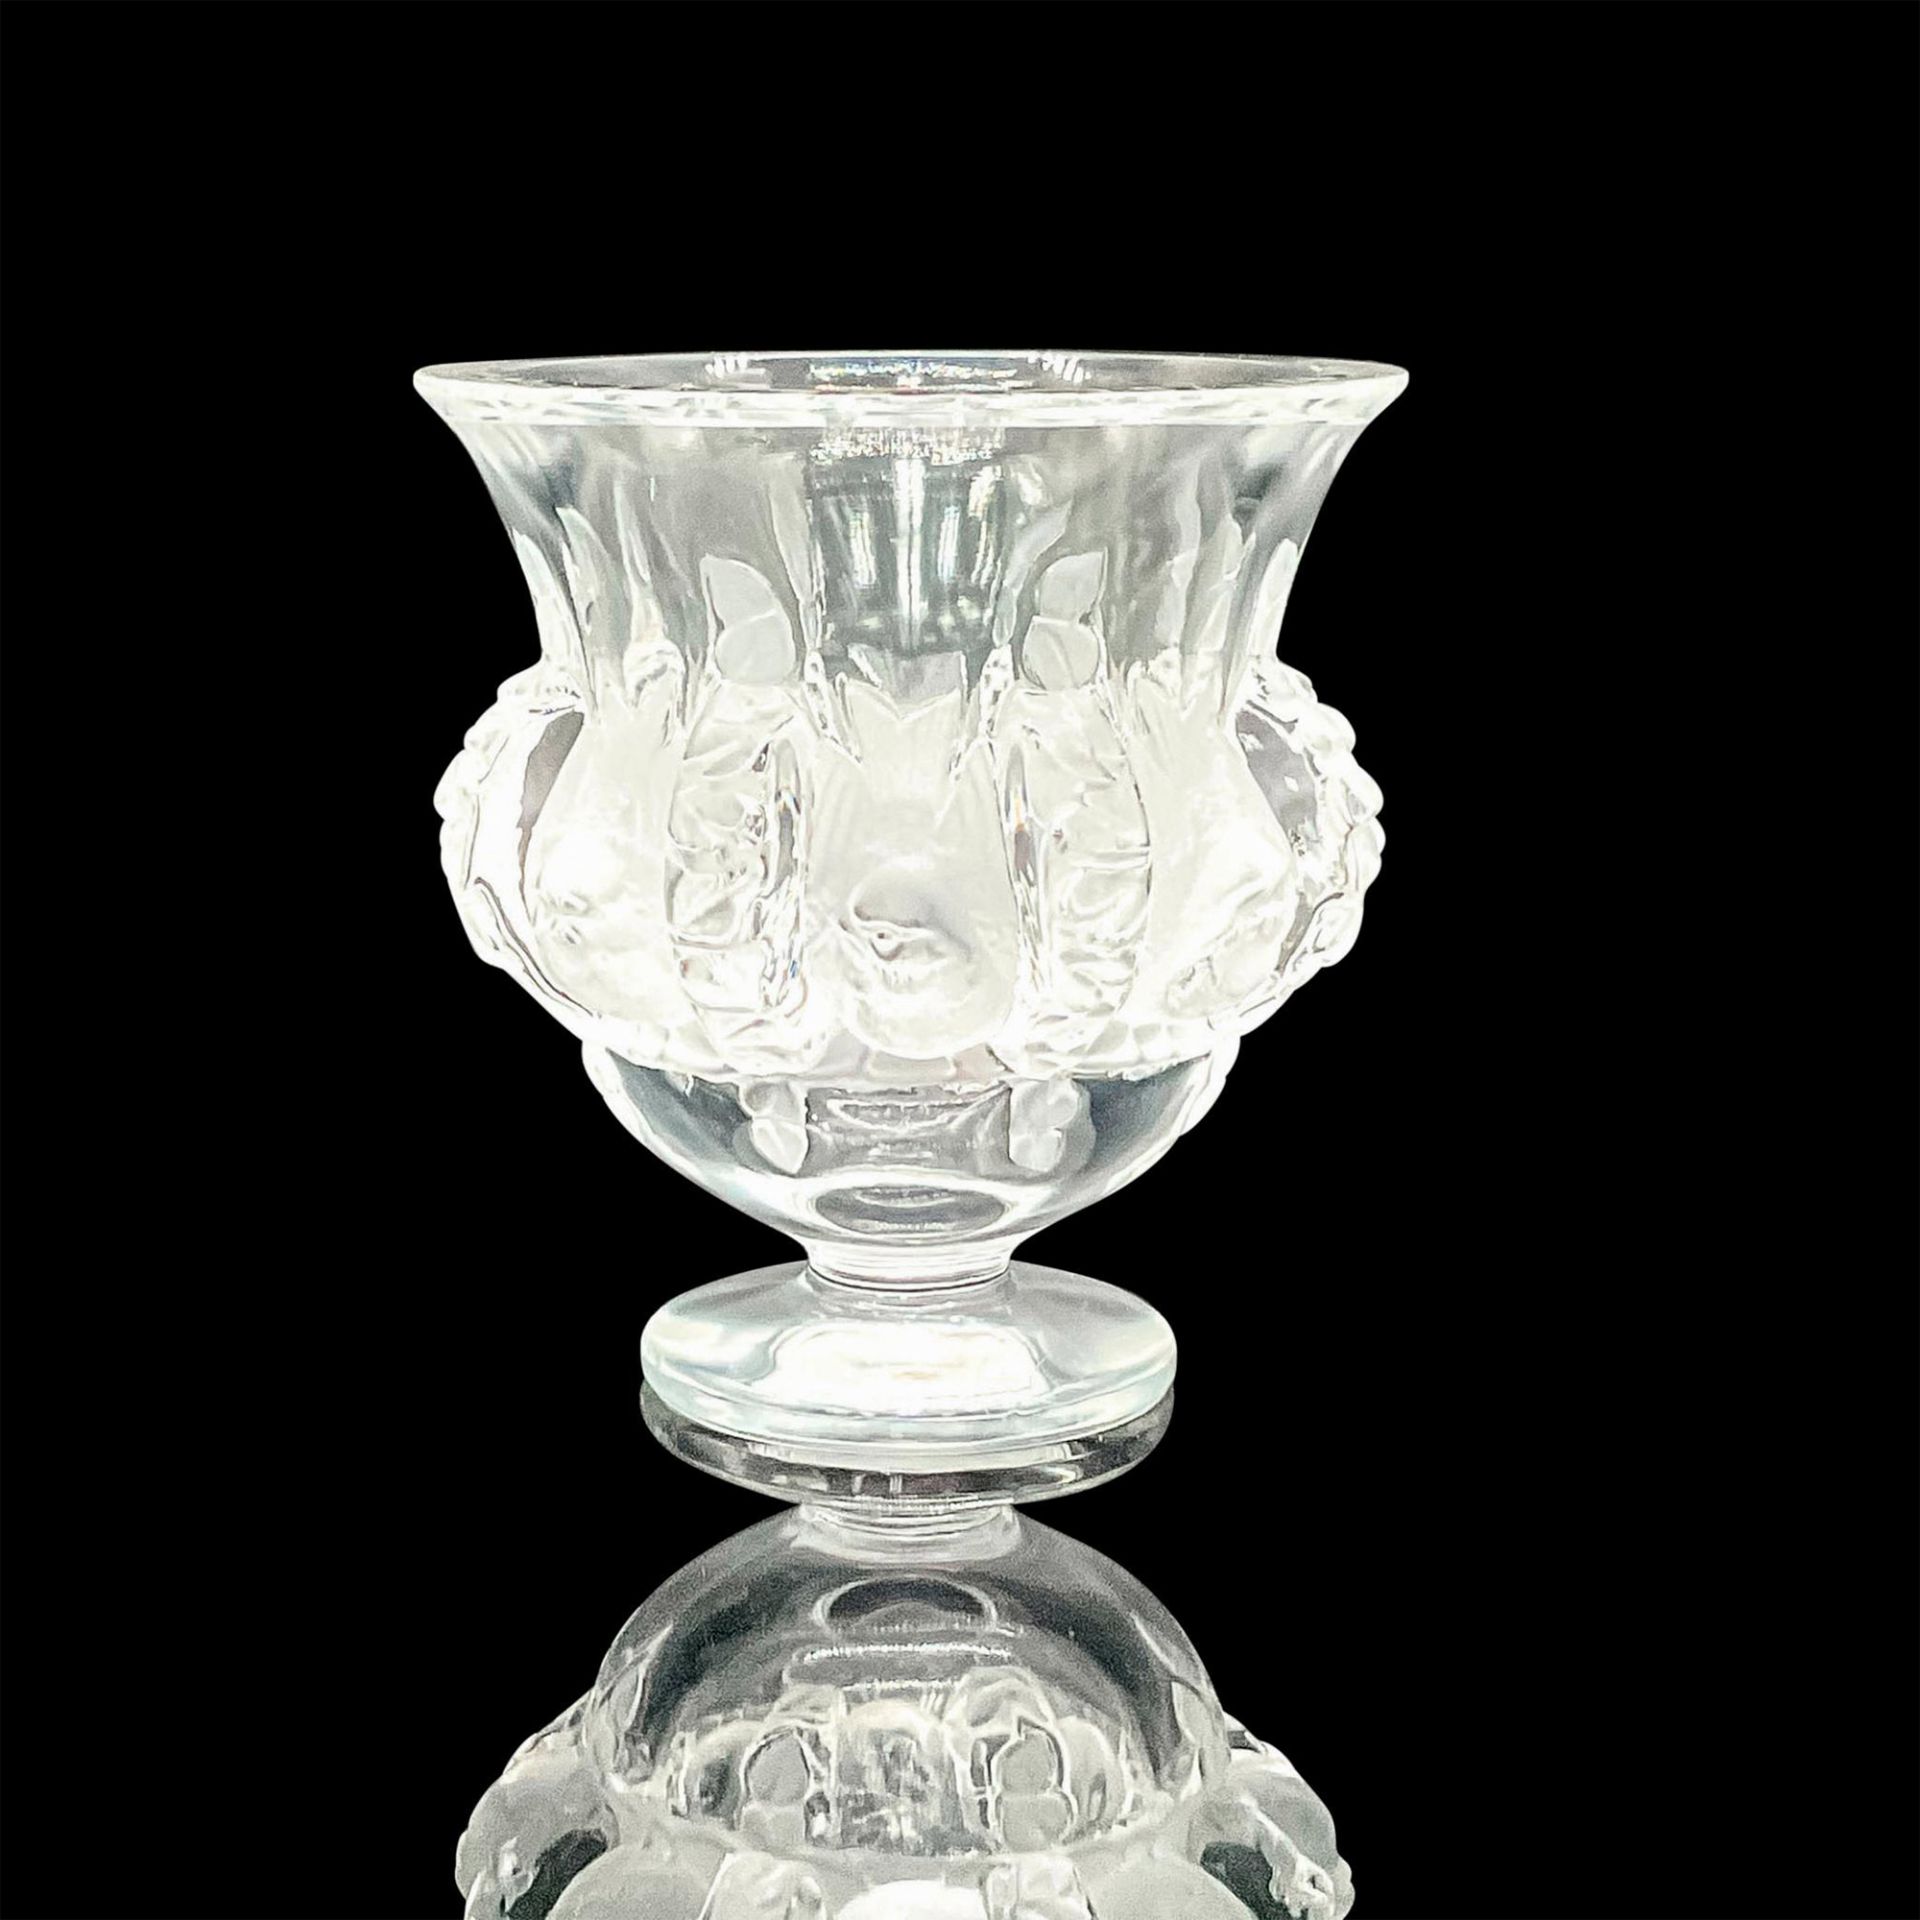 Lalique Crystal Footed Vase, Dampierre